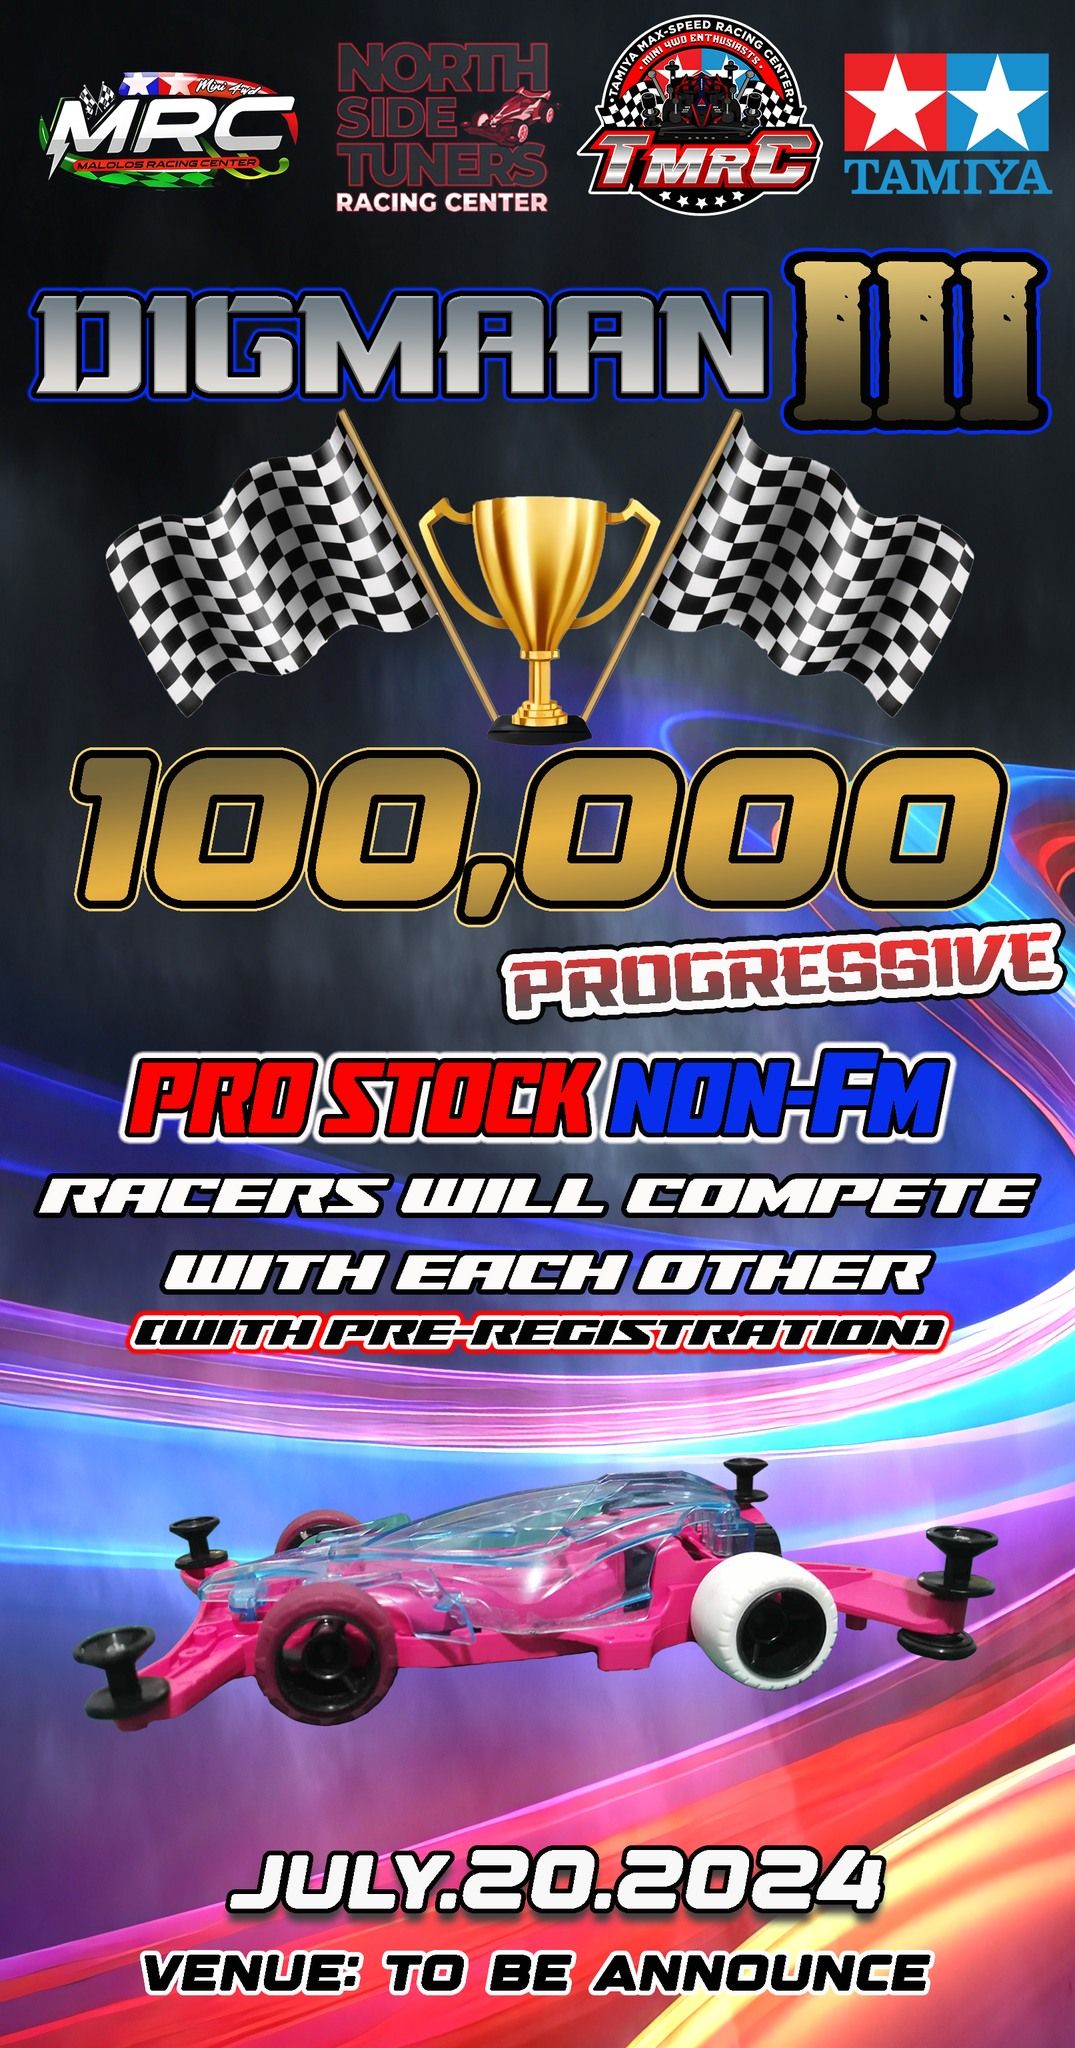 100,000 Pesos ProStock NonFM Race